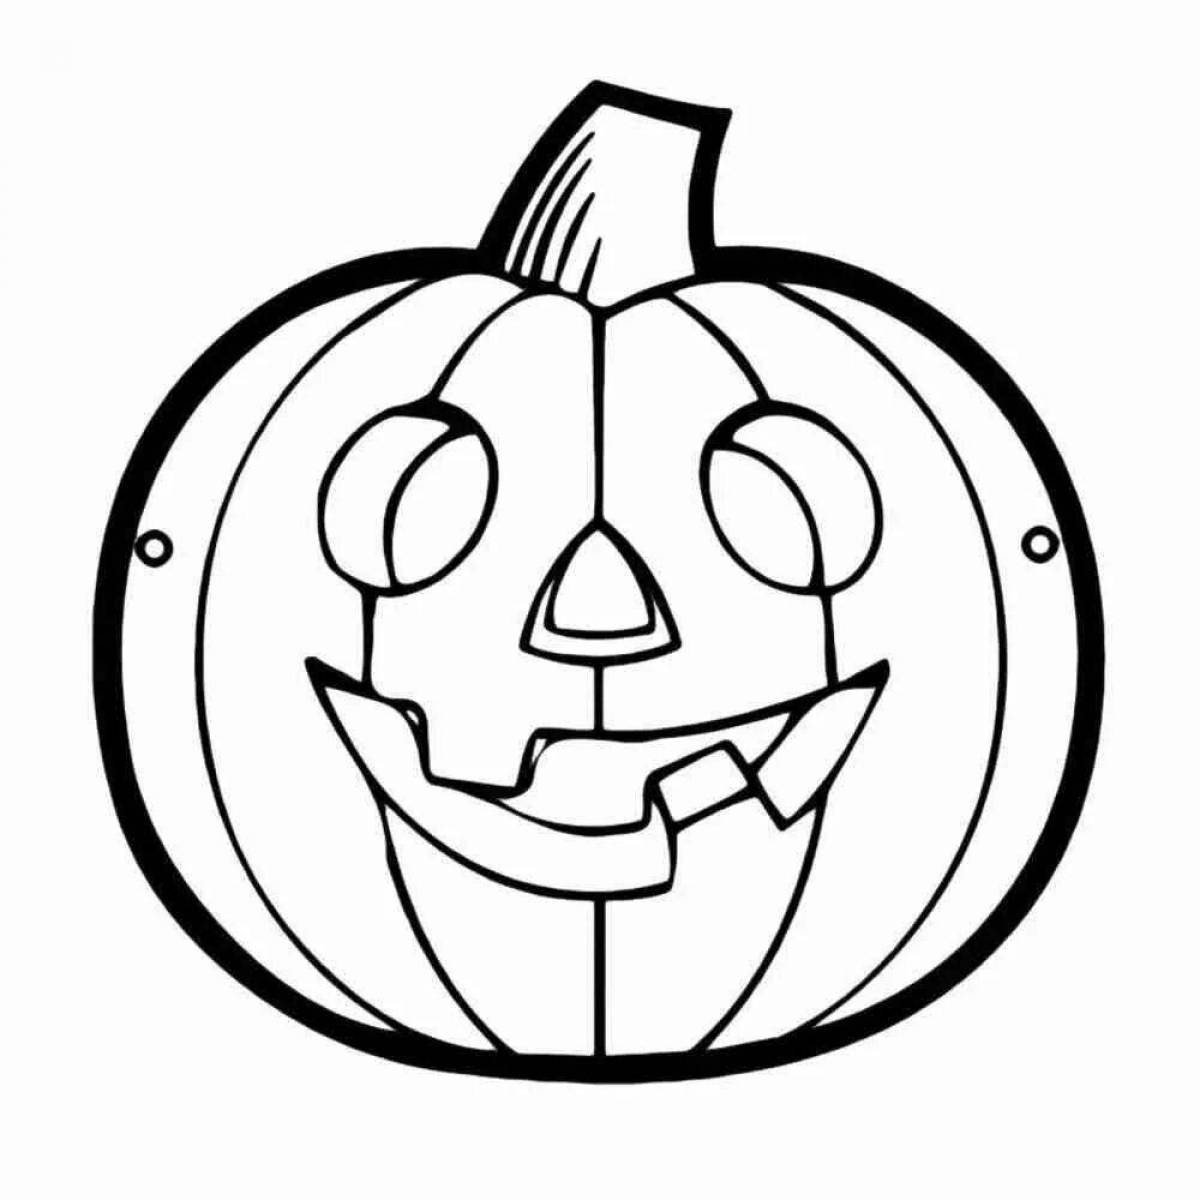 Halloween magic pumpkin coloring page